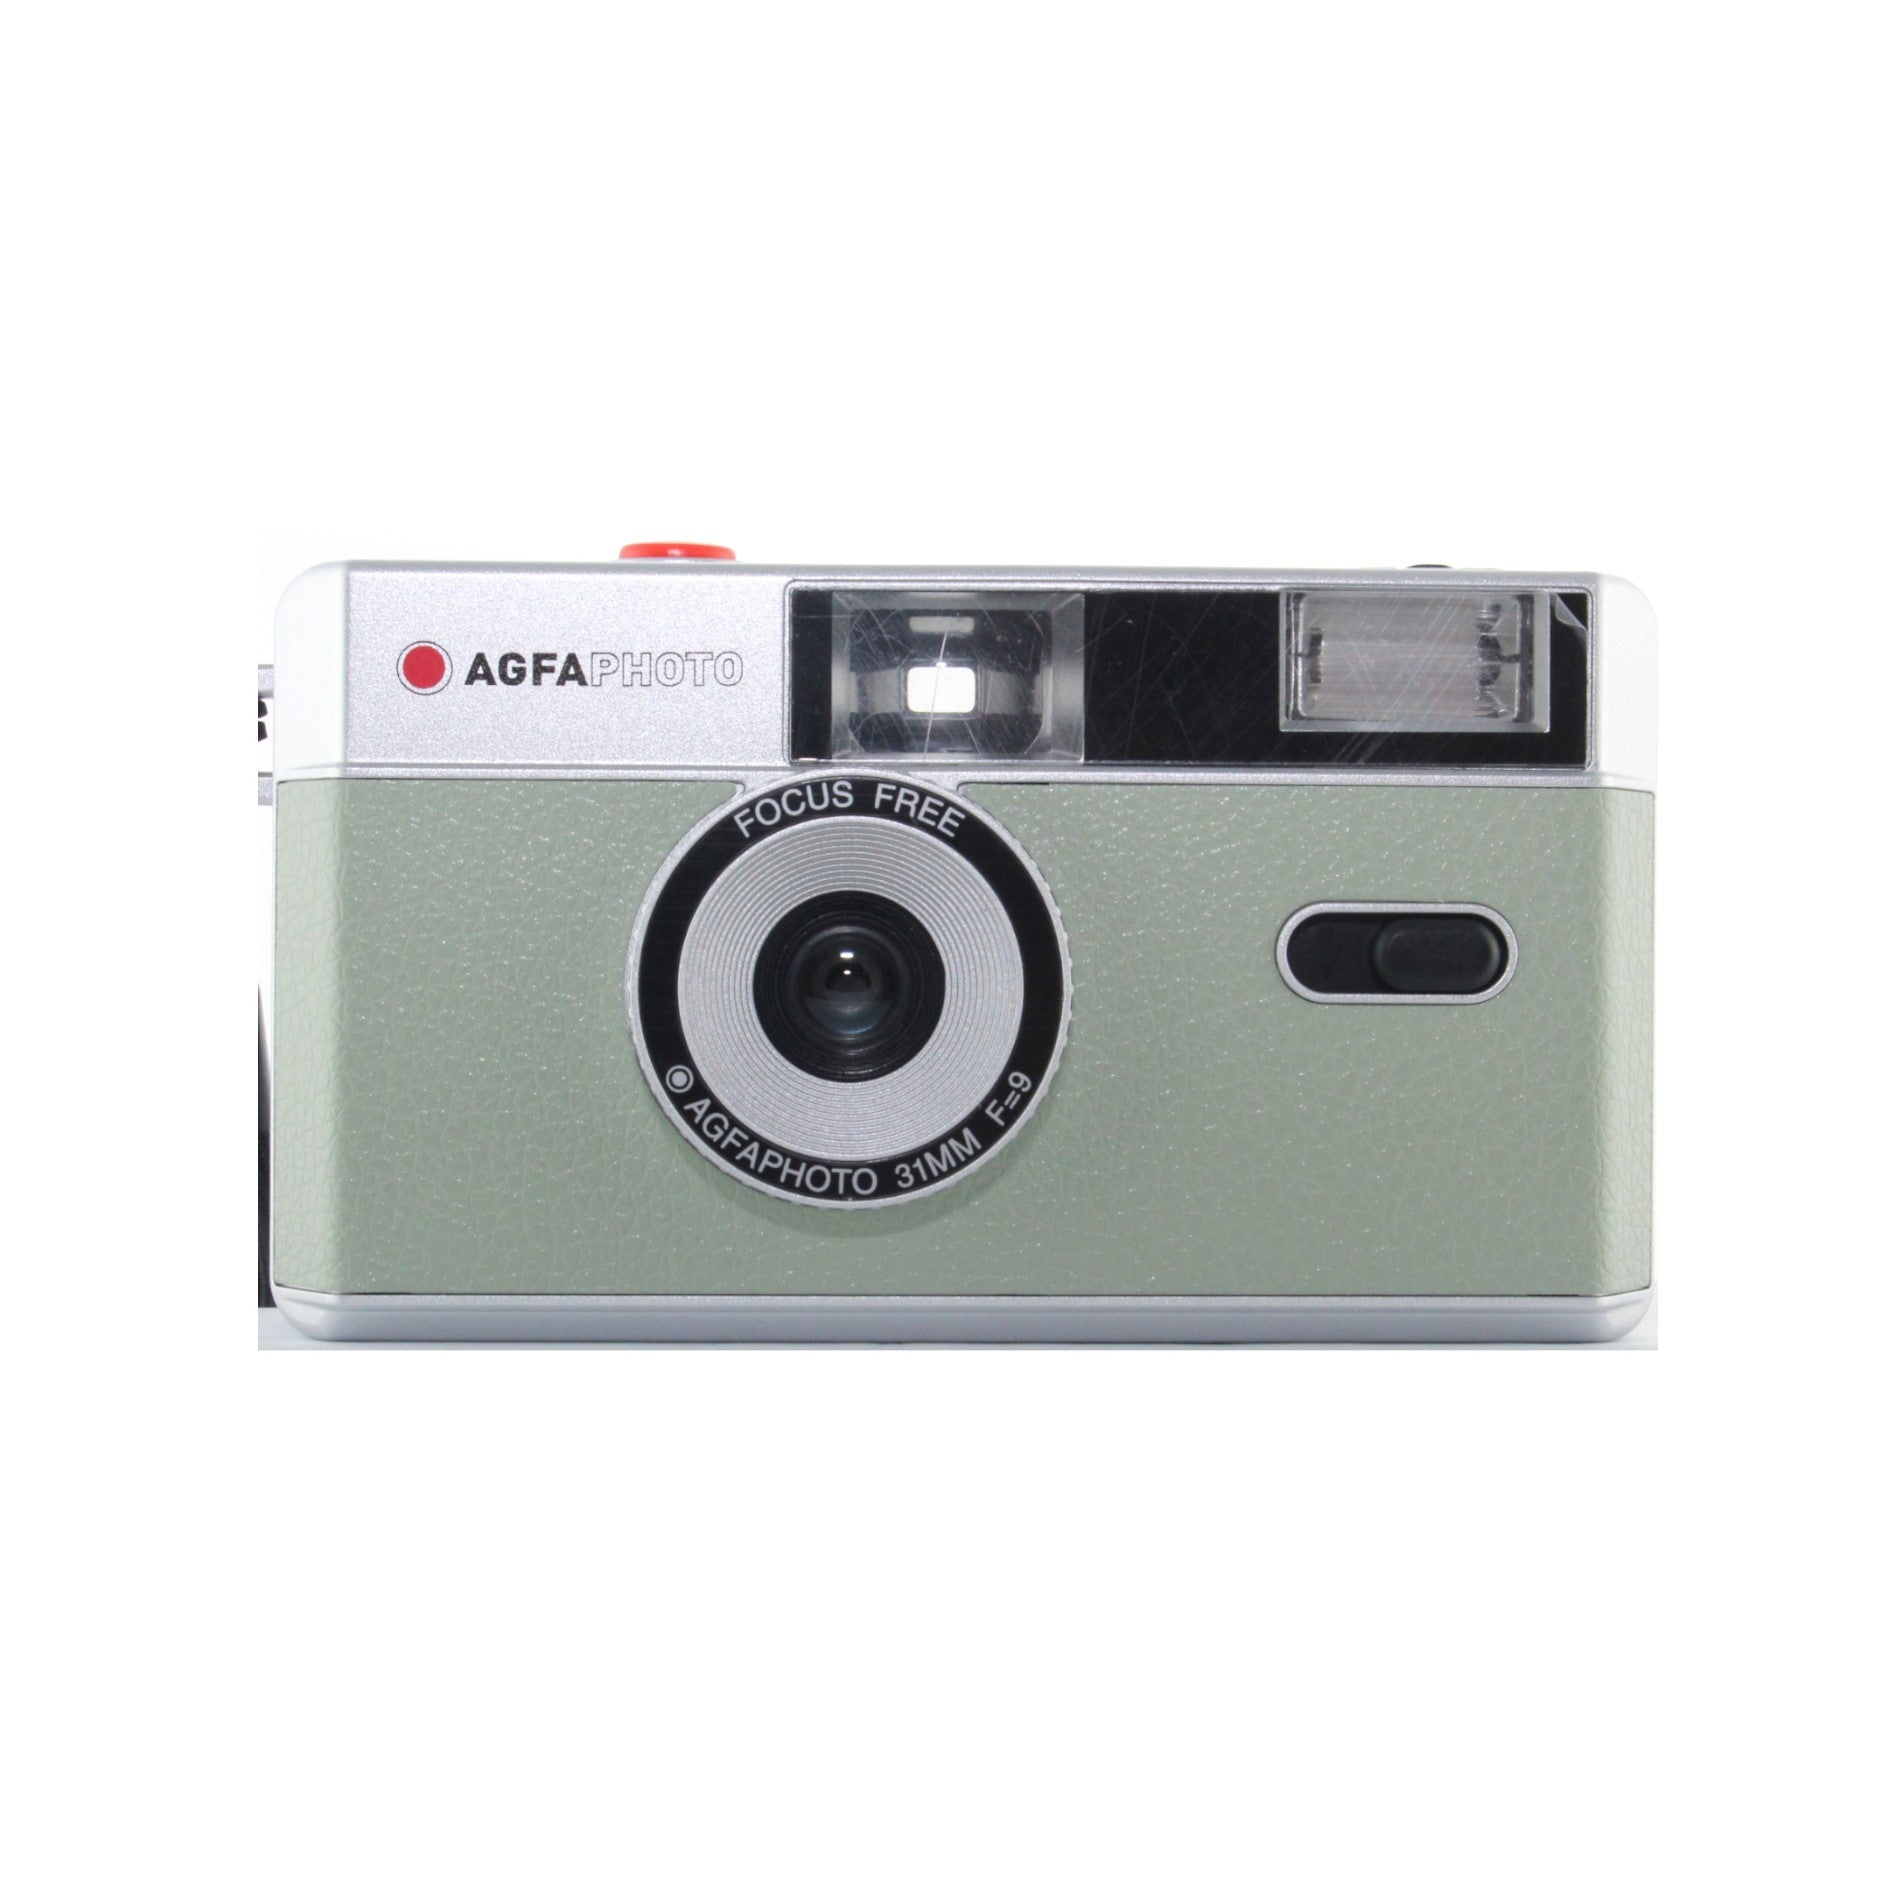 Agfa Photo Analogue 35mm Film Camera Kit